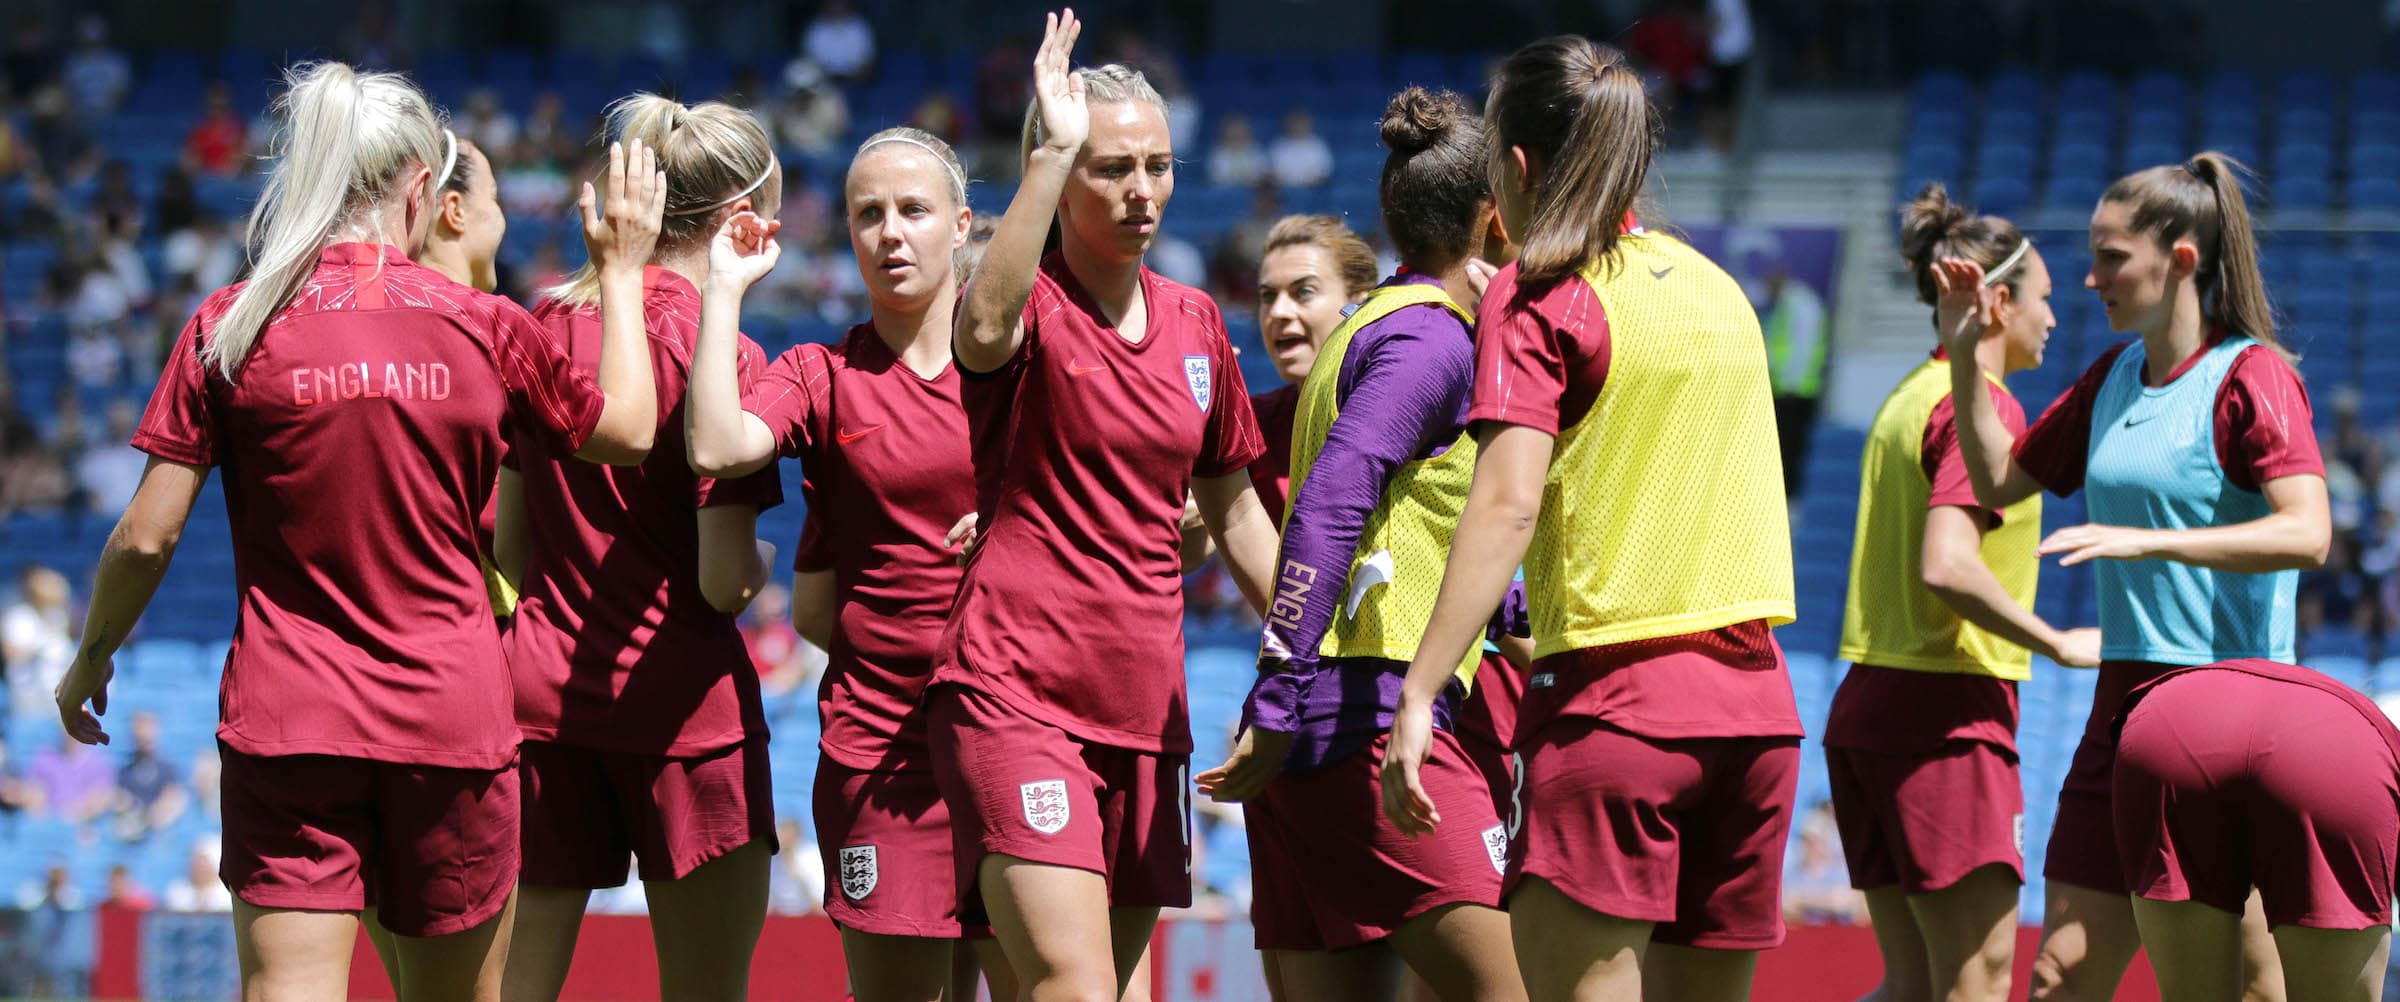 England women v new zealnd women 2019